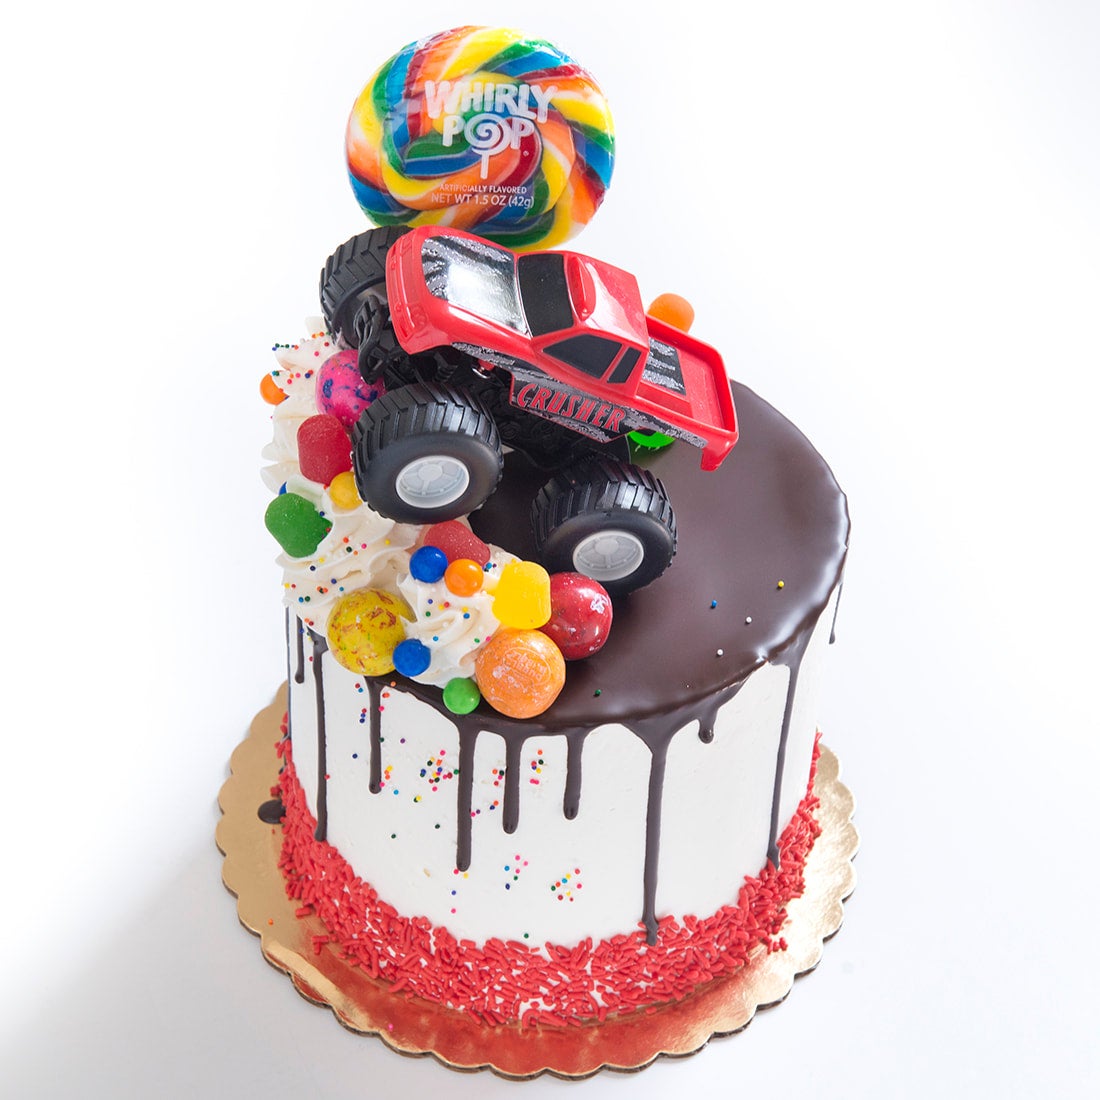 Sift and Spoon - Elmo cake, the furry red monster from Sesame Street. #red  #cartoon #elmo #sesamestreet #wheniwasakid #friends #cookiemonster #cute # monster #cakesforkids #cartooncake #instafood #instacake #instagood  #Instagram #instayumm #cakestagram ...